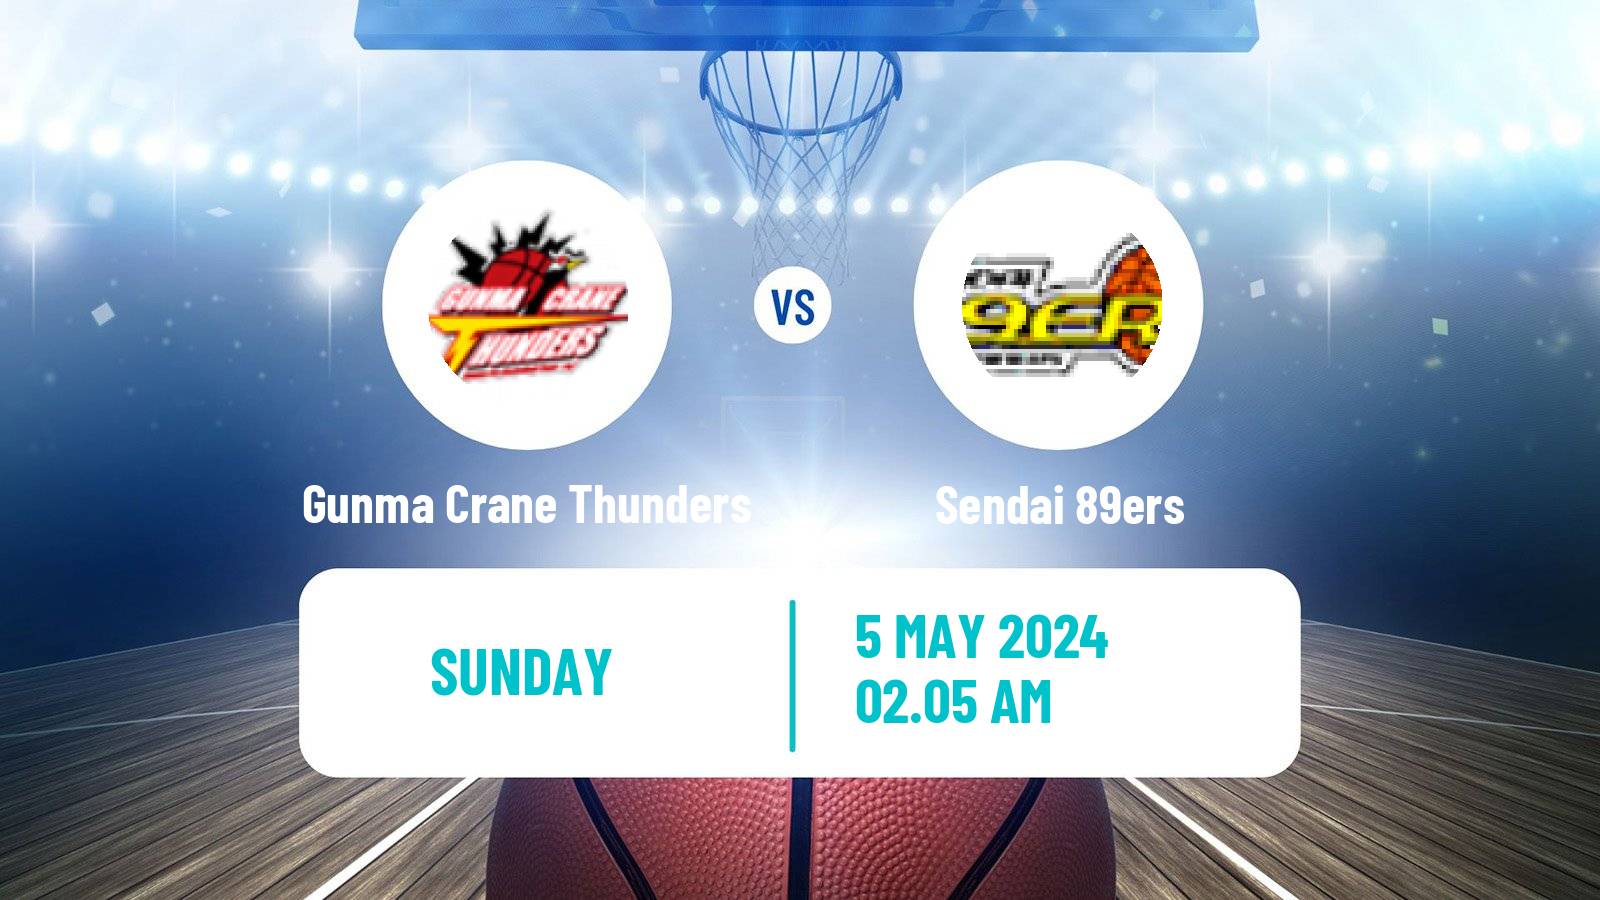 Basketball BJ League Gunma Crane Thunders - Sendai 89ers